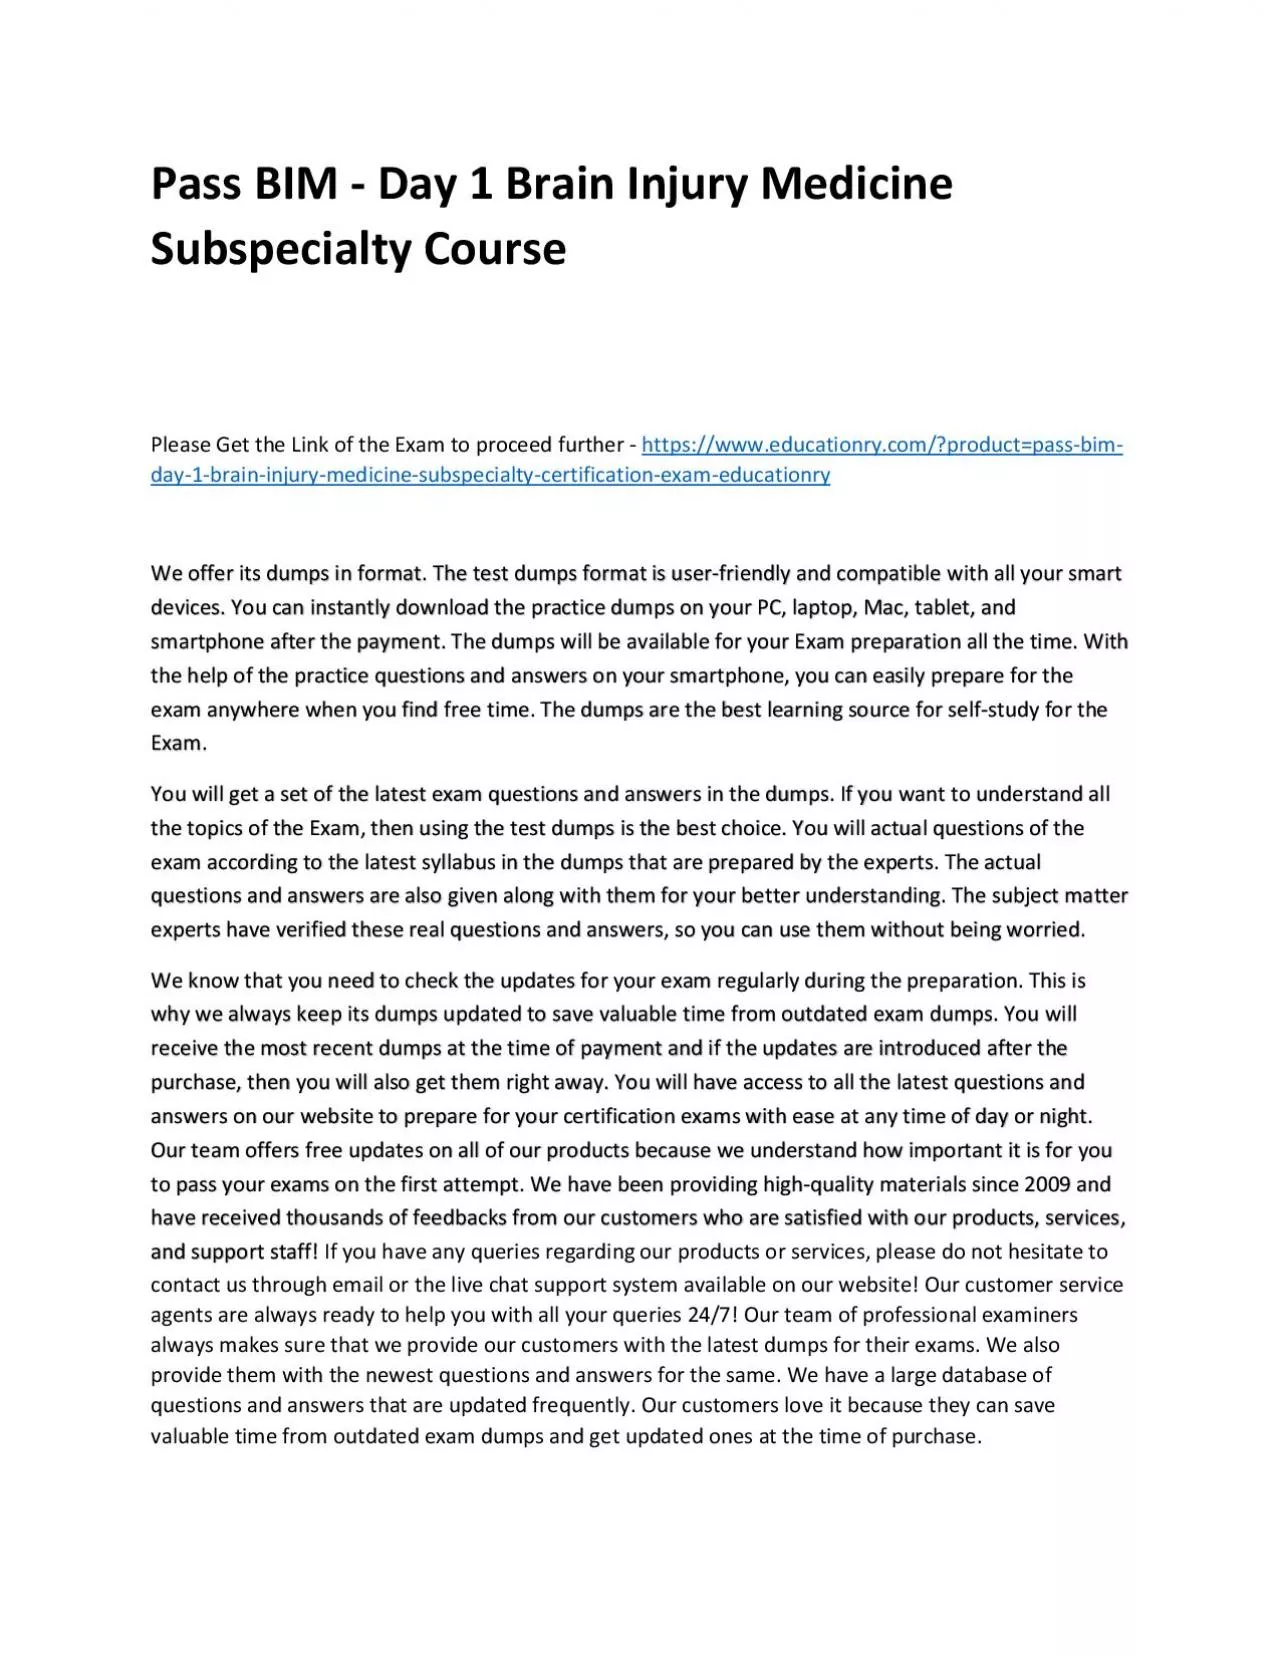 Pass BIM - Day 1 Brain Injury Medicine Subspecialty Practice Course